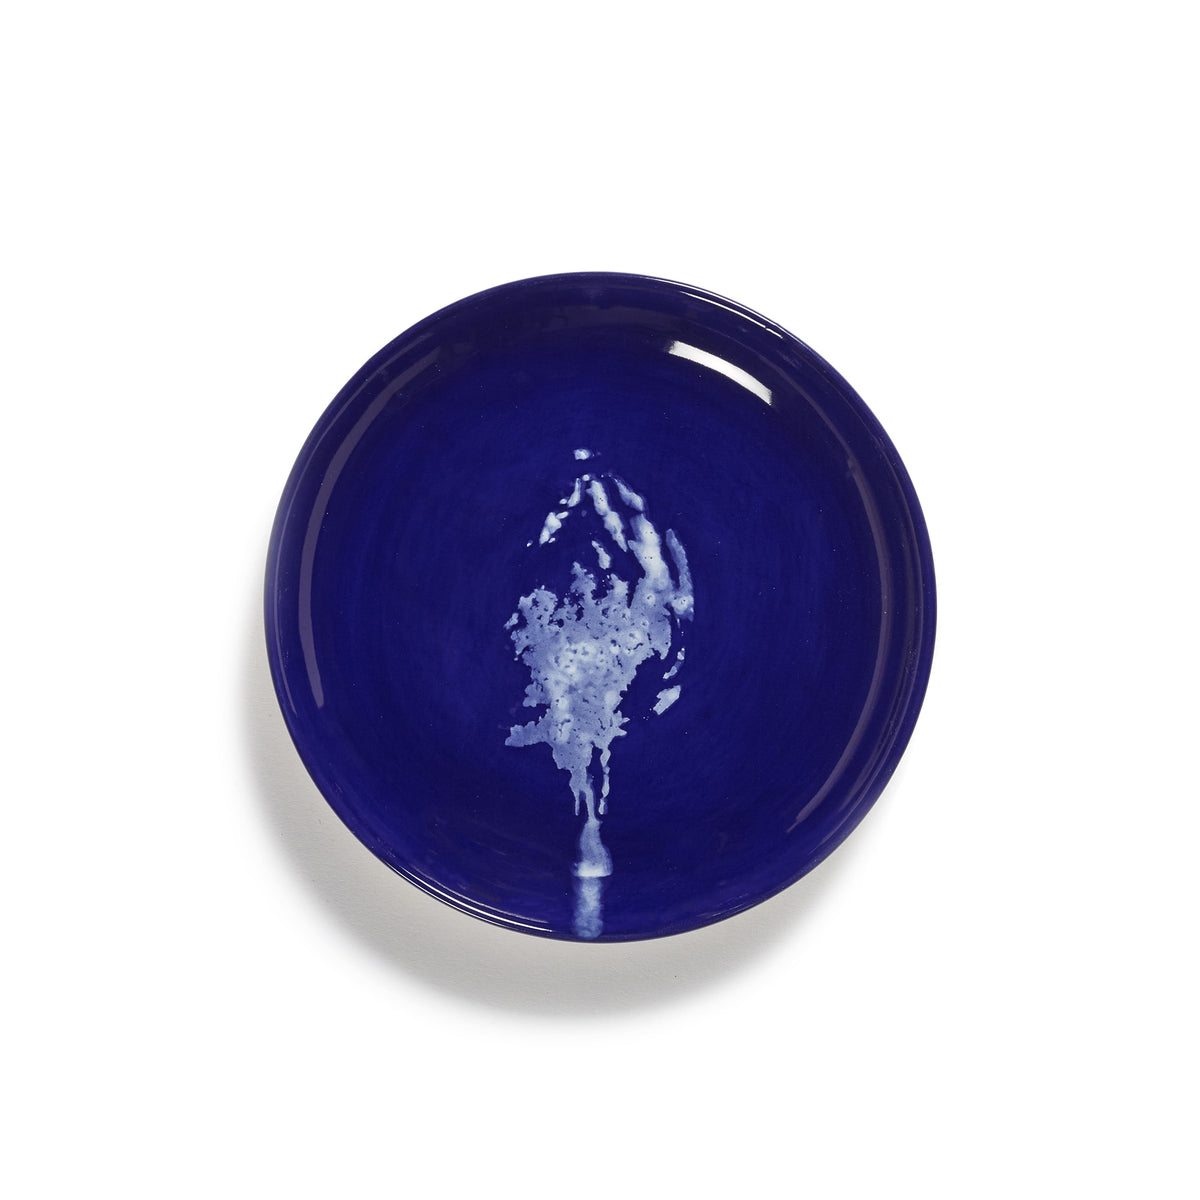 Lapis Lazuli Plate with White Artichoke Motif - XS